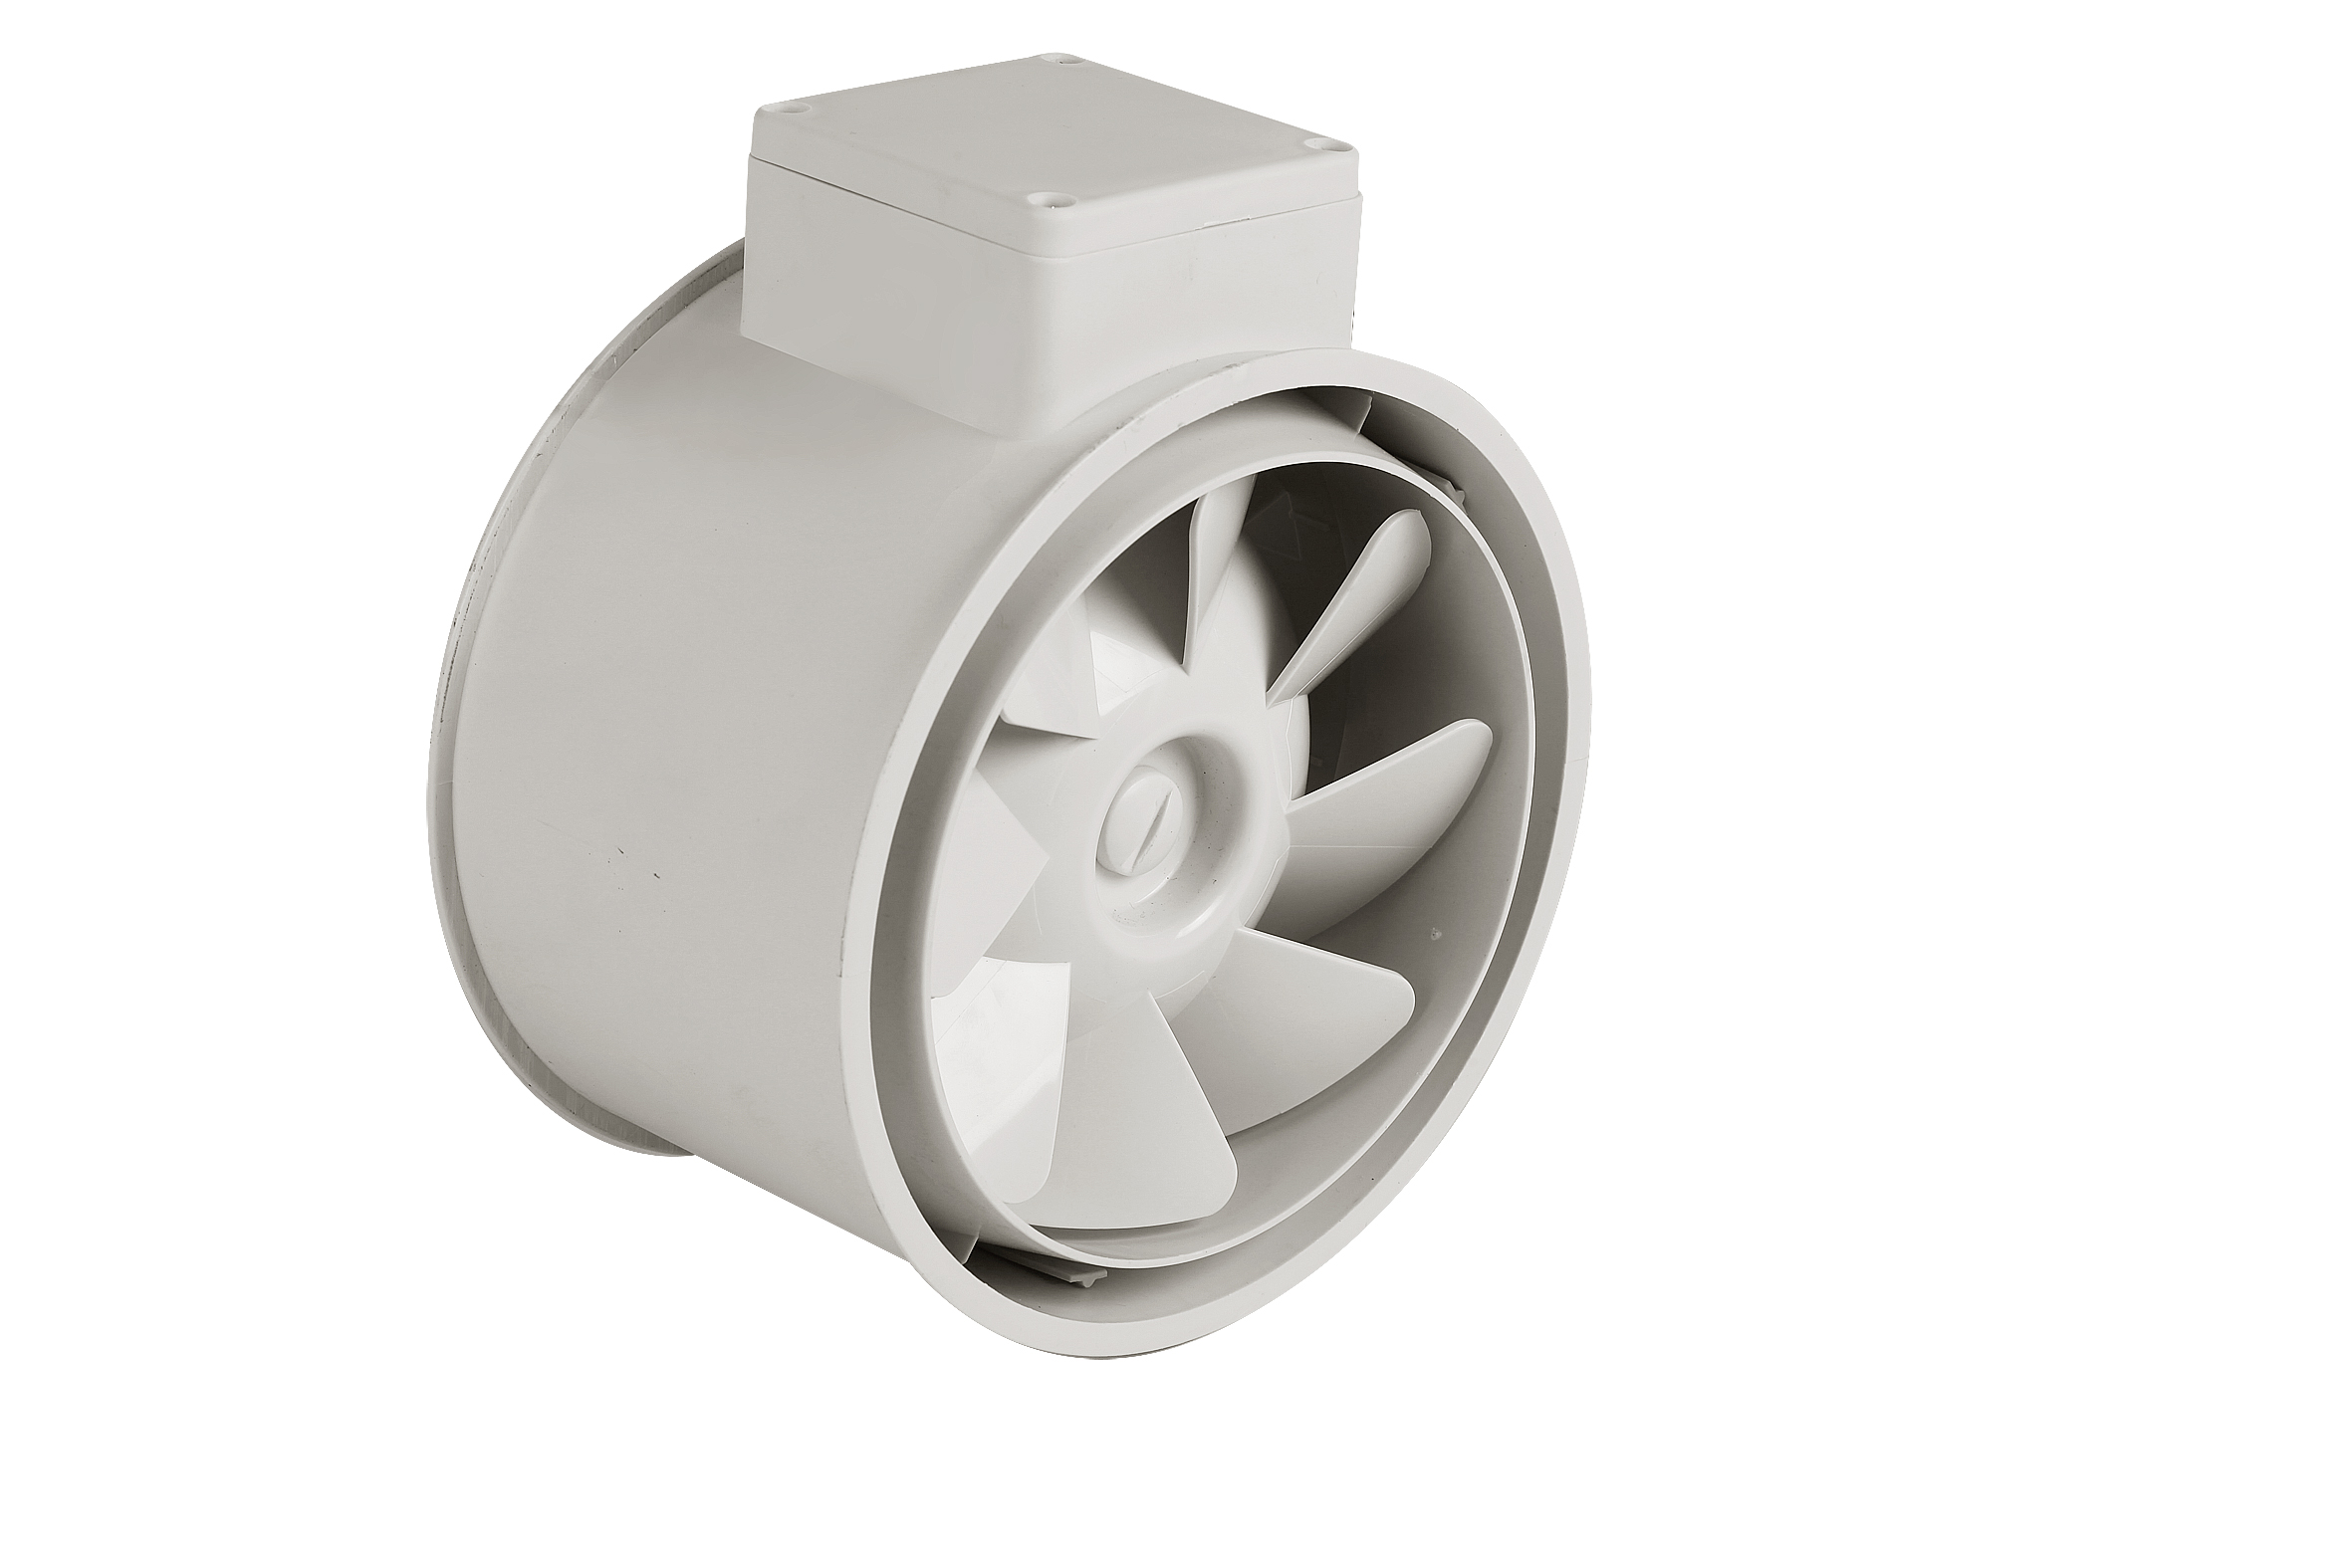 Mixed flow inline duct fan for hydroponics greenhouse ventilation (DJT25UM-66P)